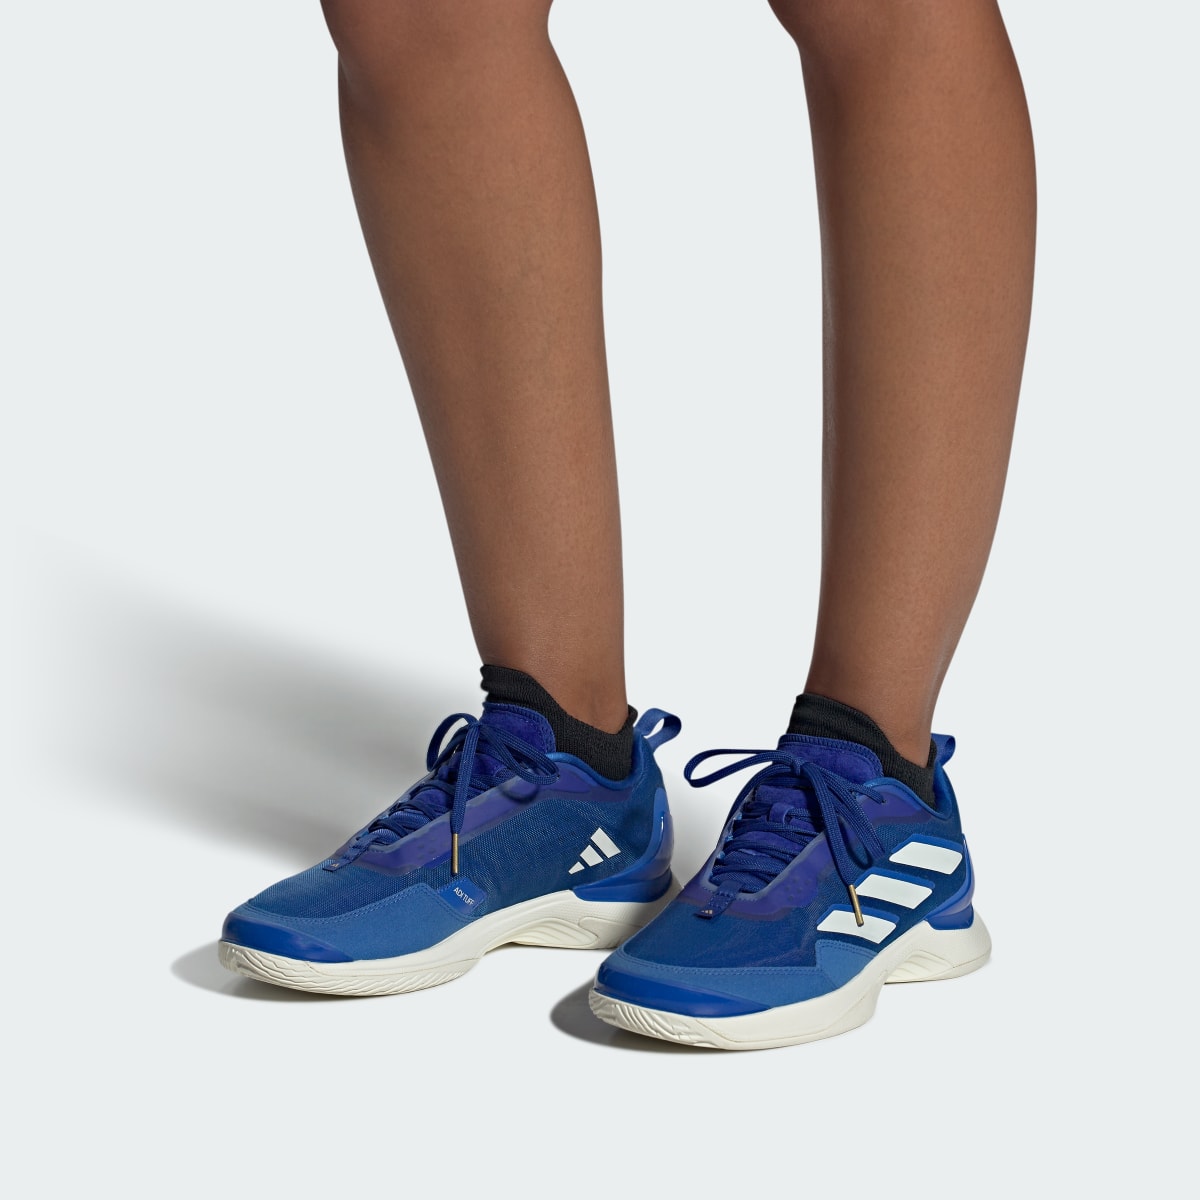 Adidas Avacourt Tennis Shoes. 5